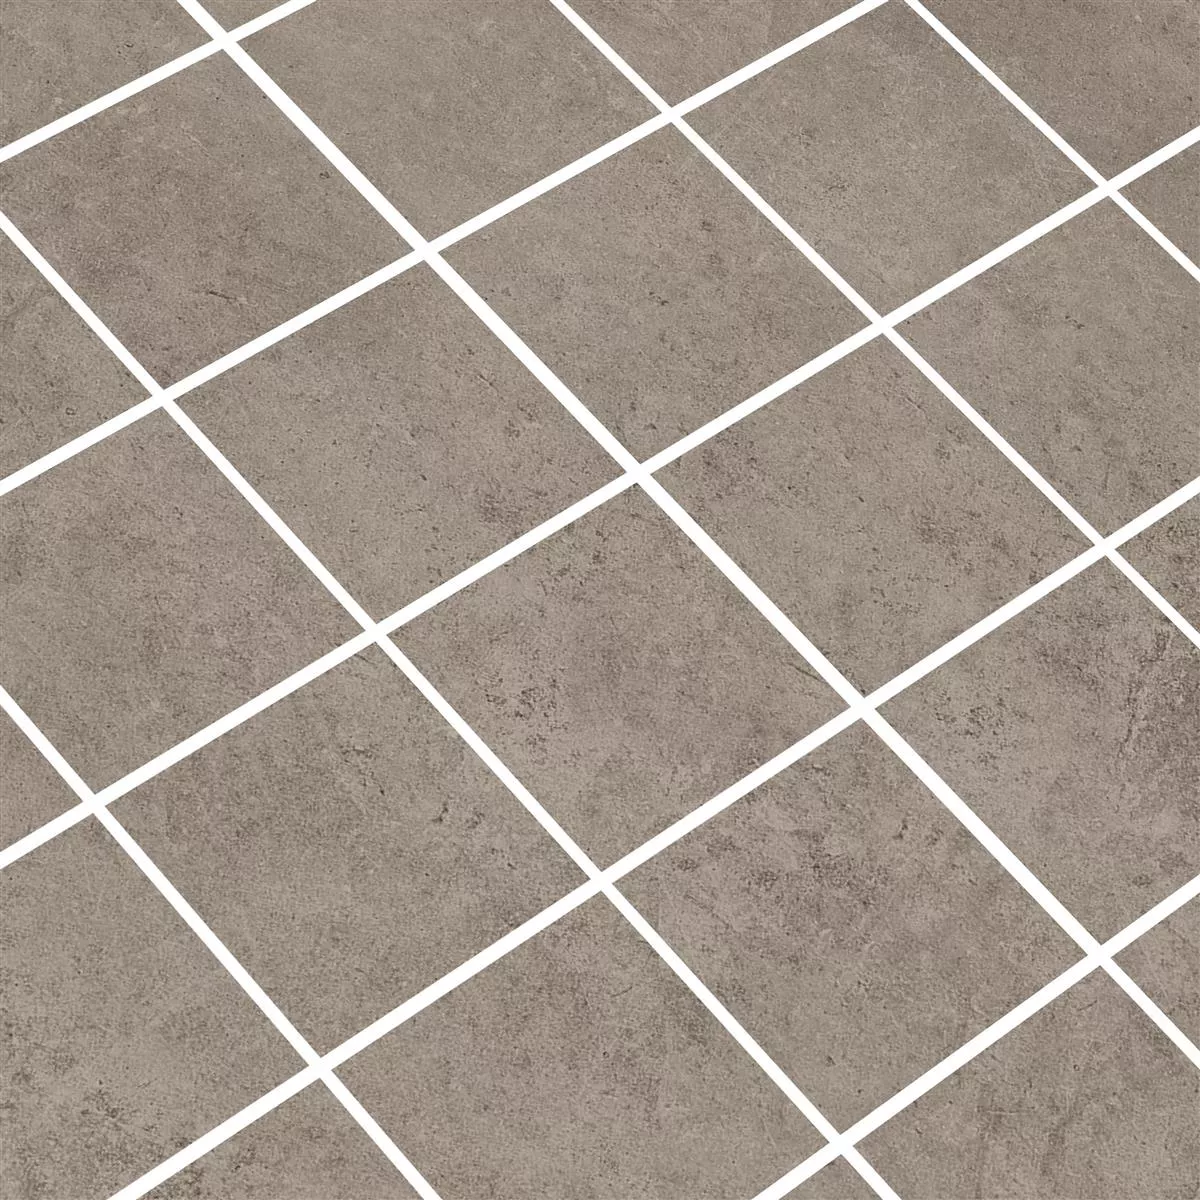 Mozaik Pločice Colossus Cement-Izgled, Imitacija Smećkastosiva